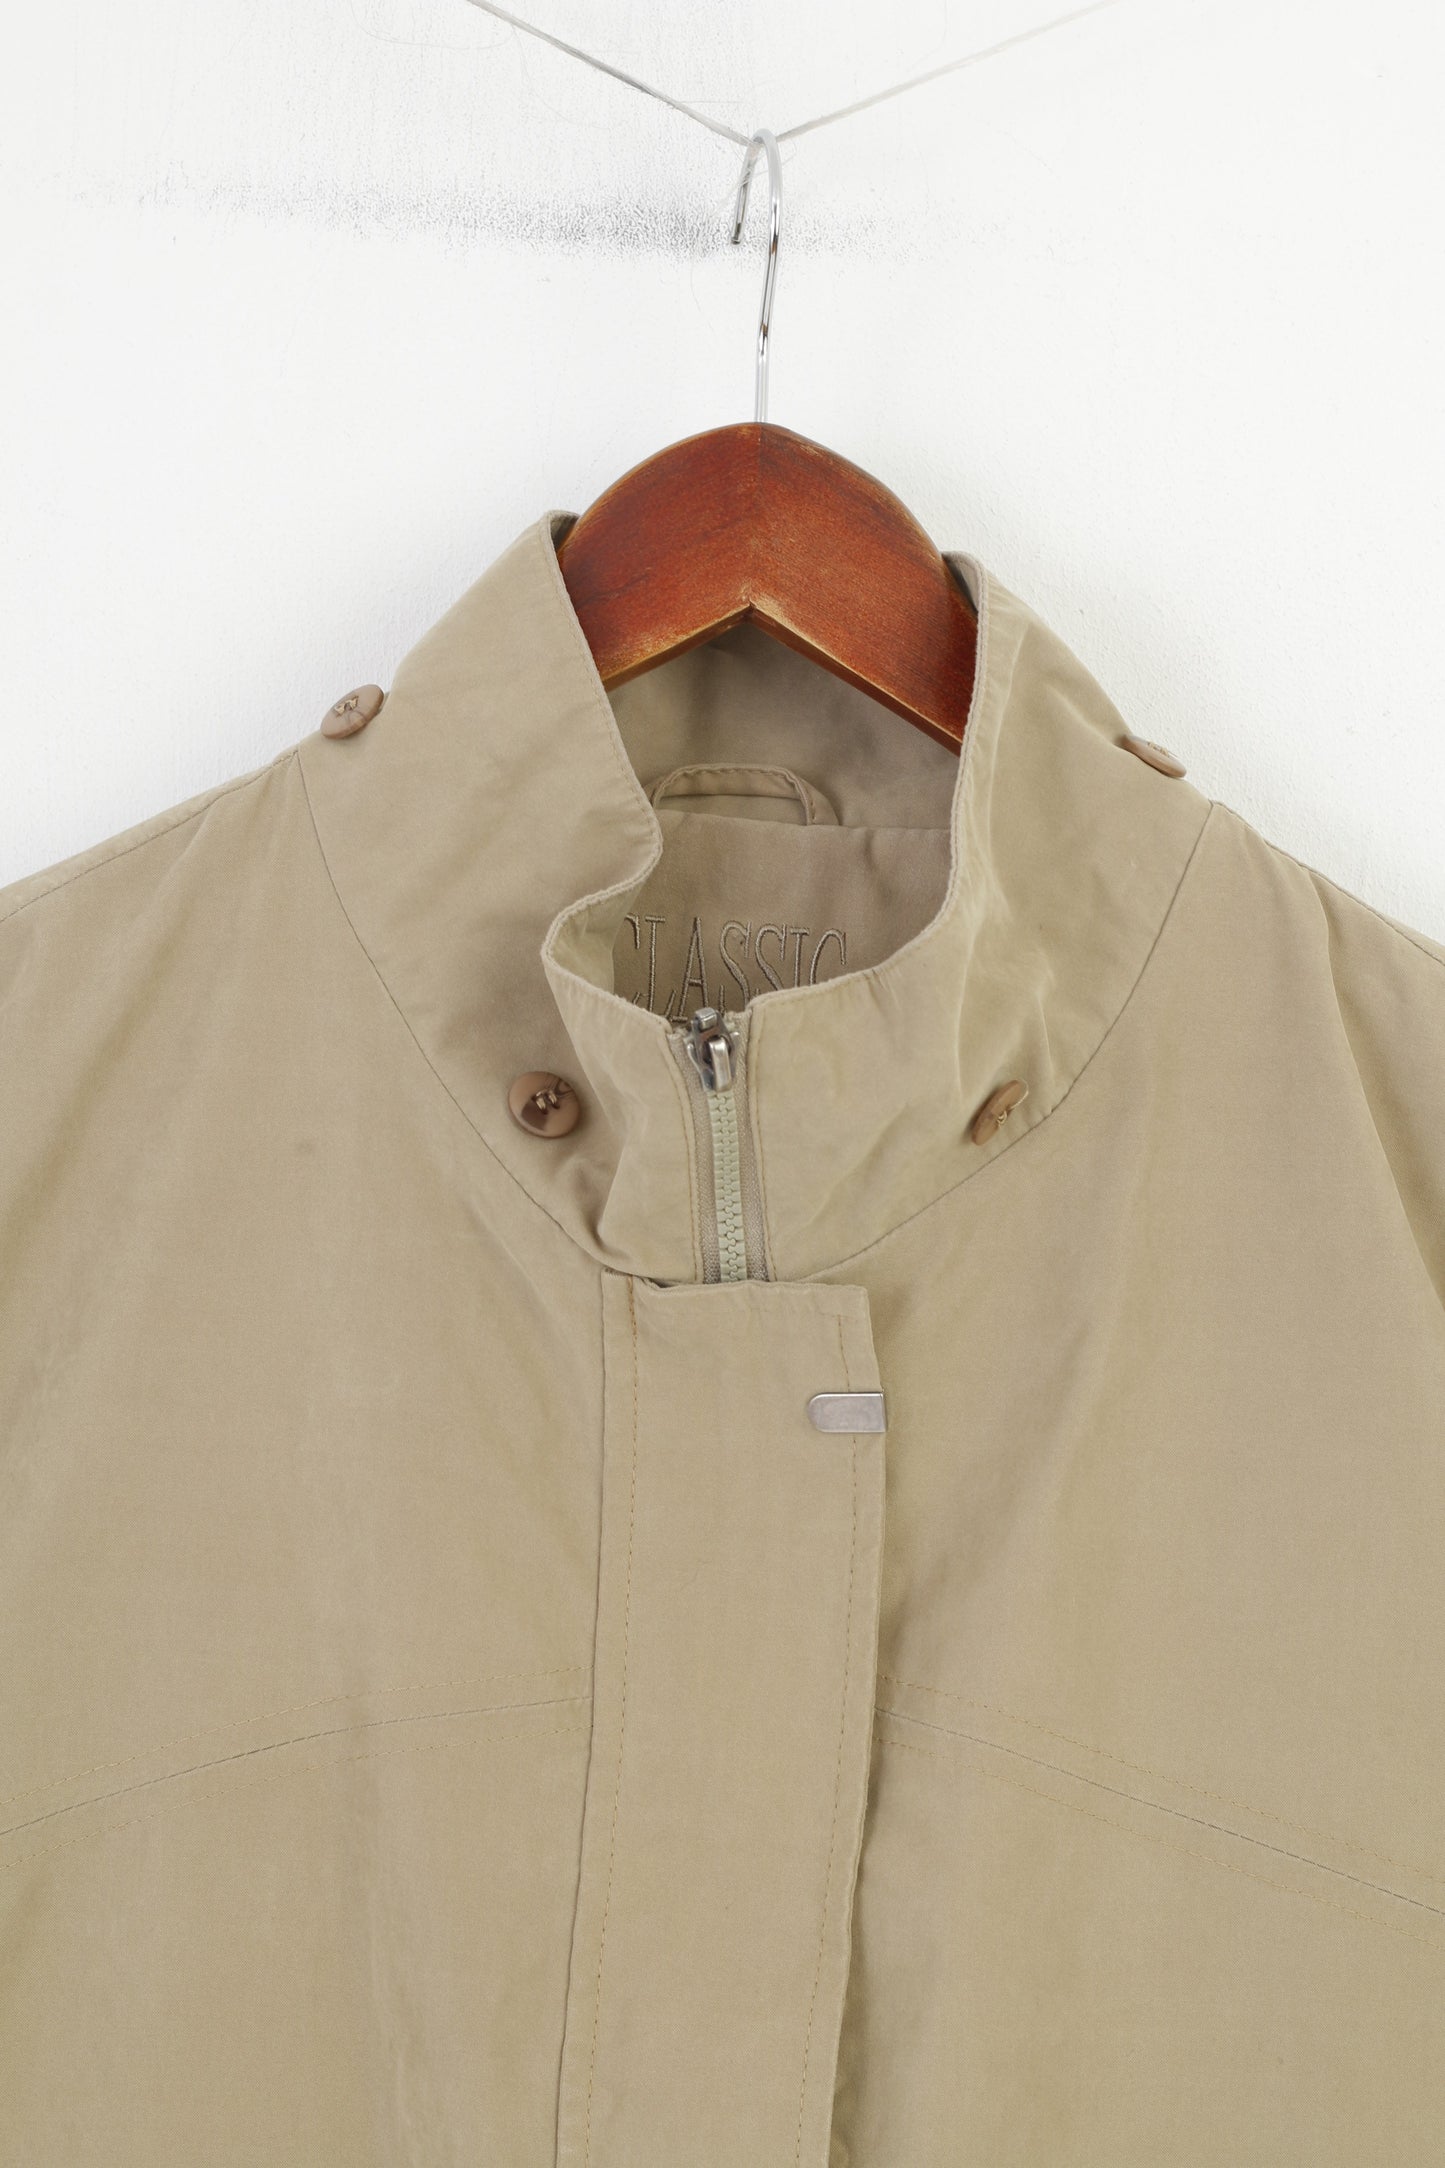 Classic by Etage Women 44 XL Jacket Light Green Full Zipper Vintage Coat Top